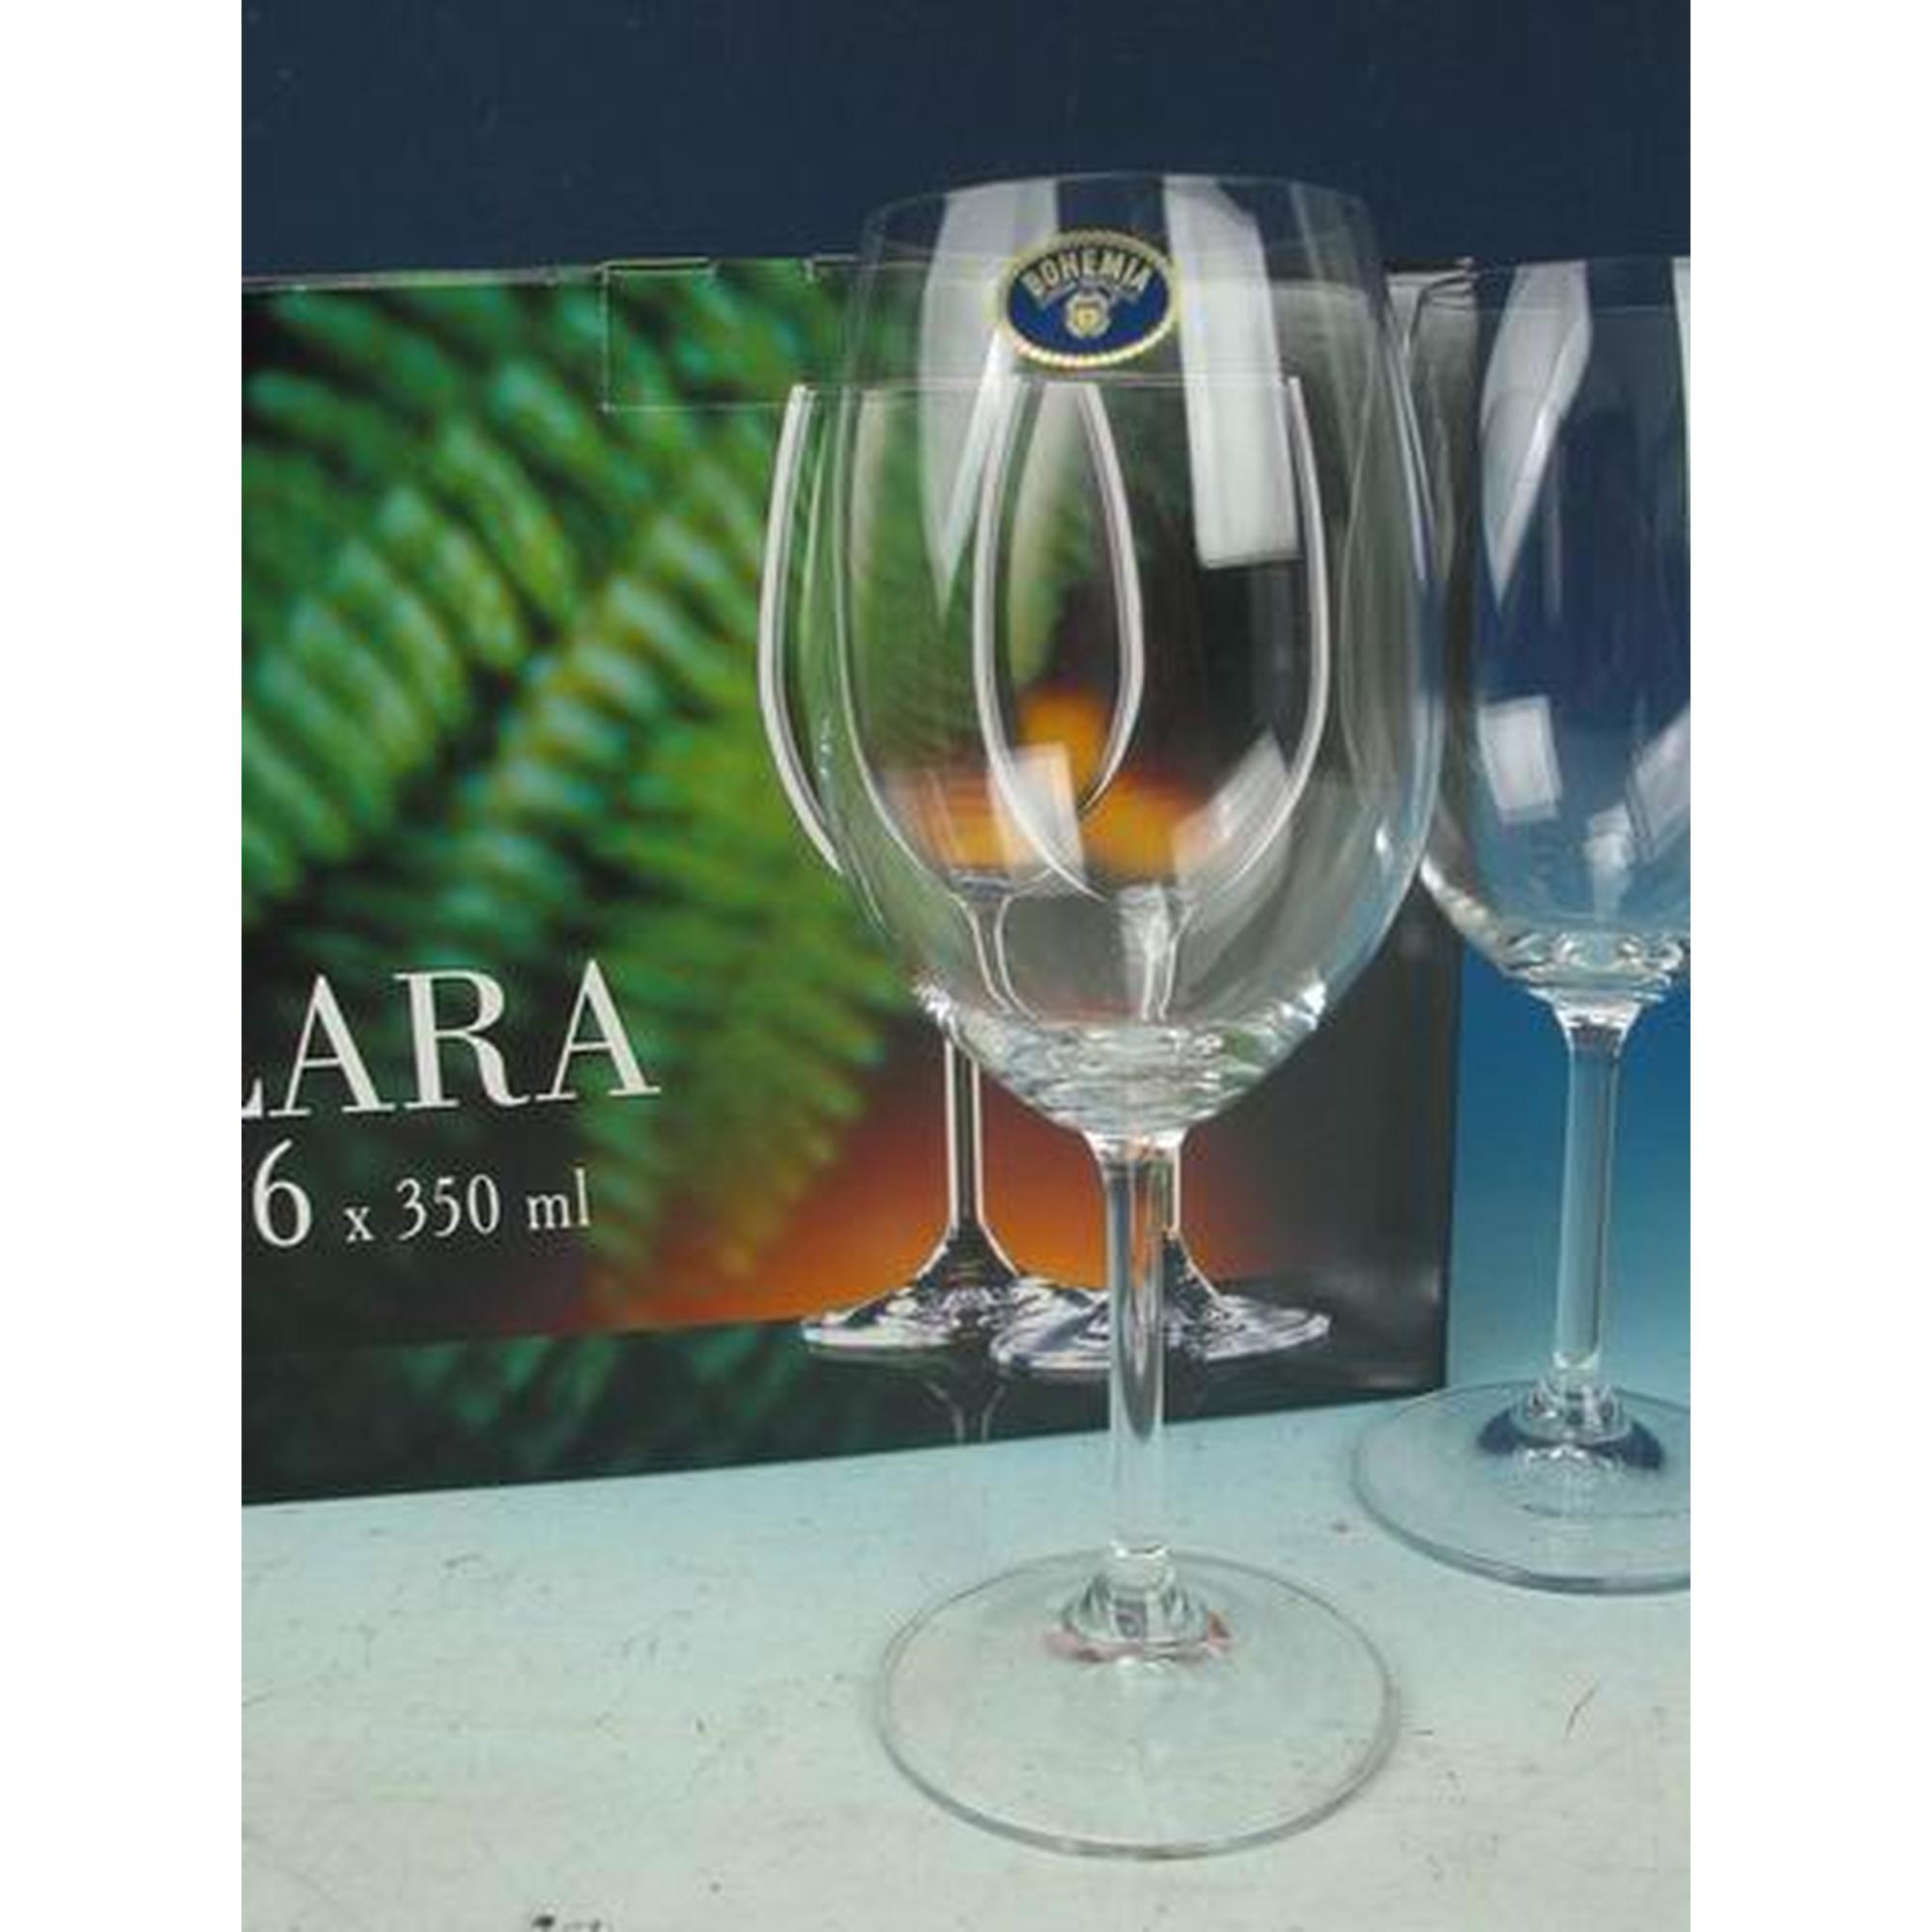 KLARA WINE GLASS 350ML E6 - 375-40415350